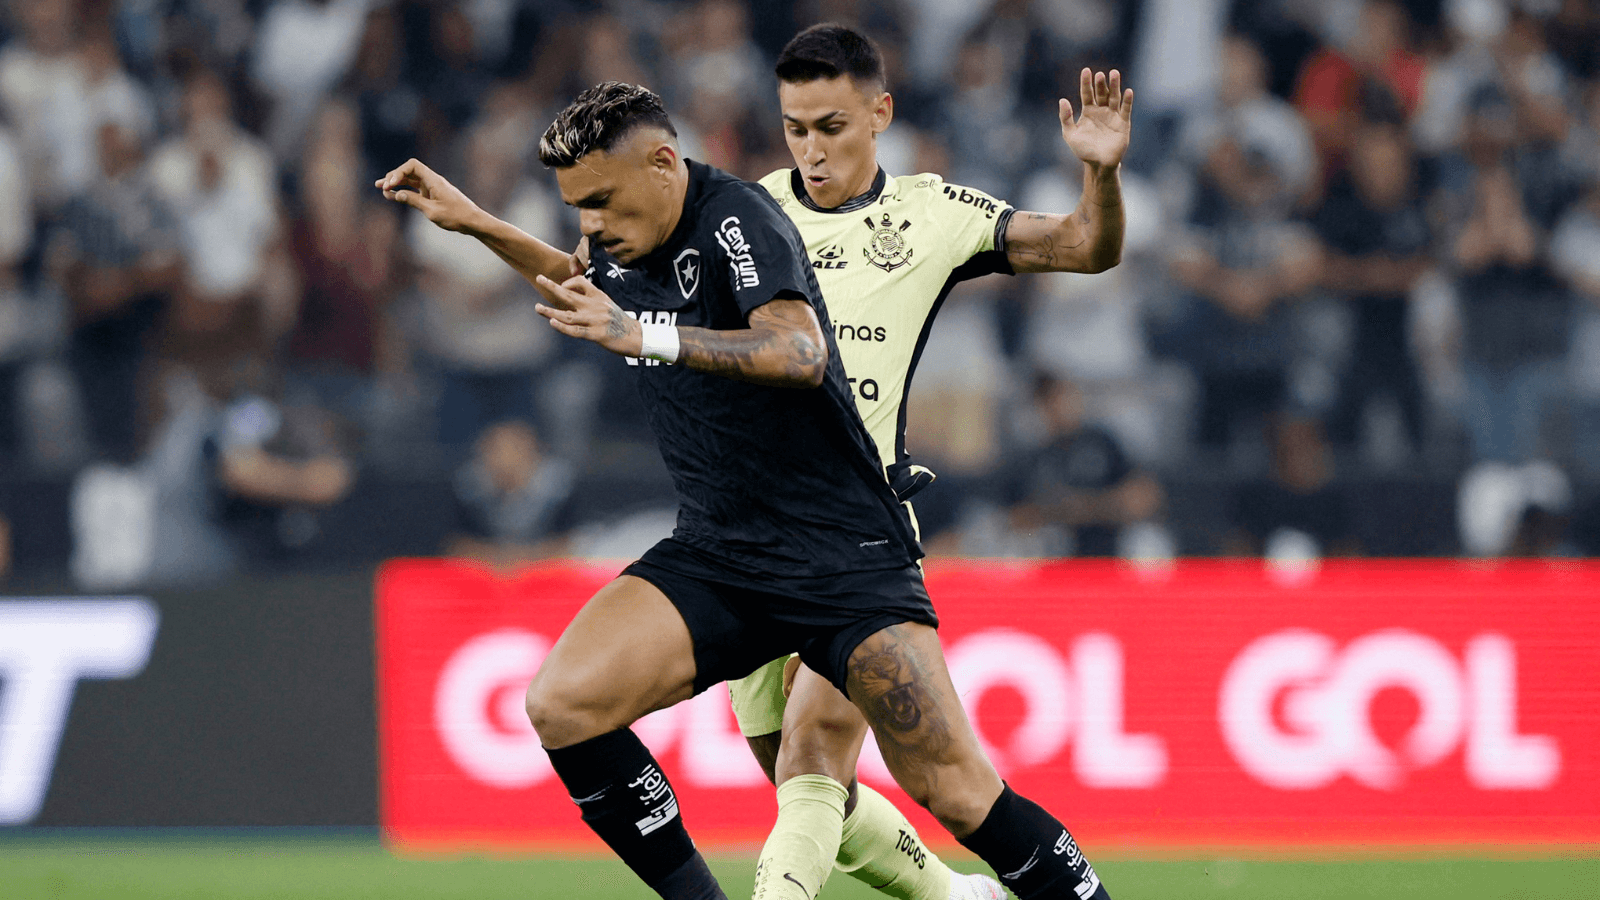 Corinthians 1x0 Botafogo: Pós-jogo